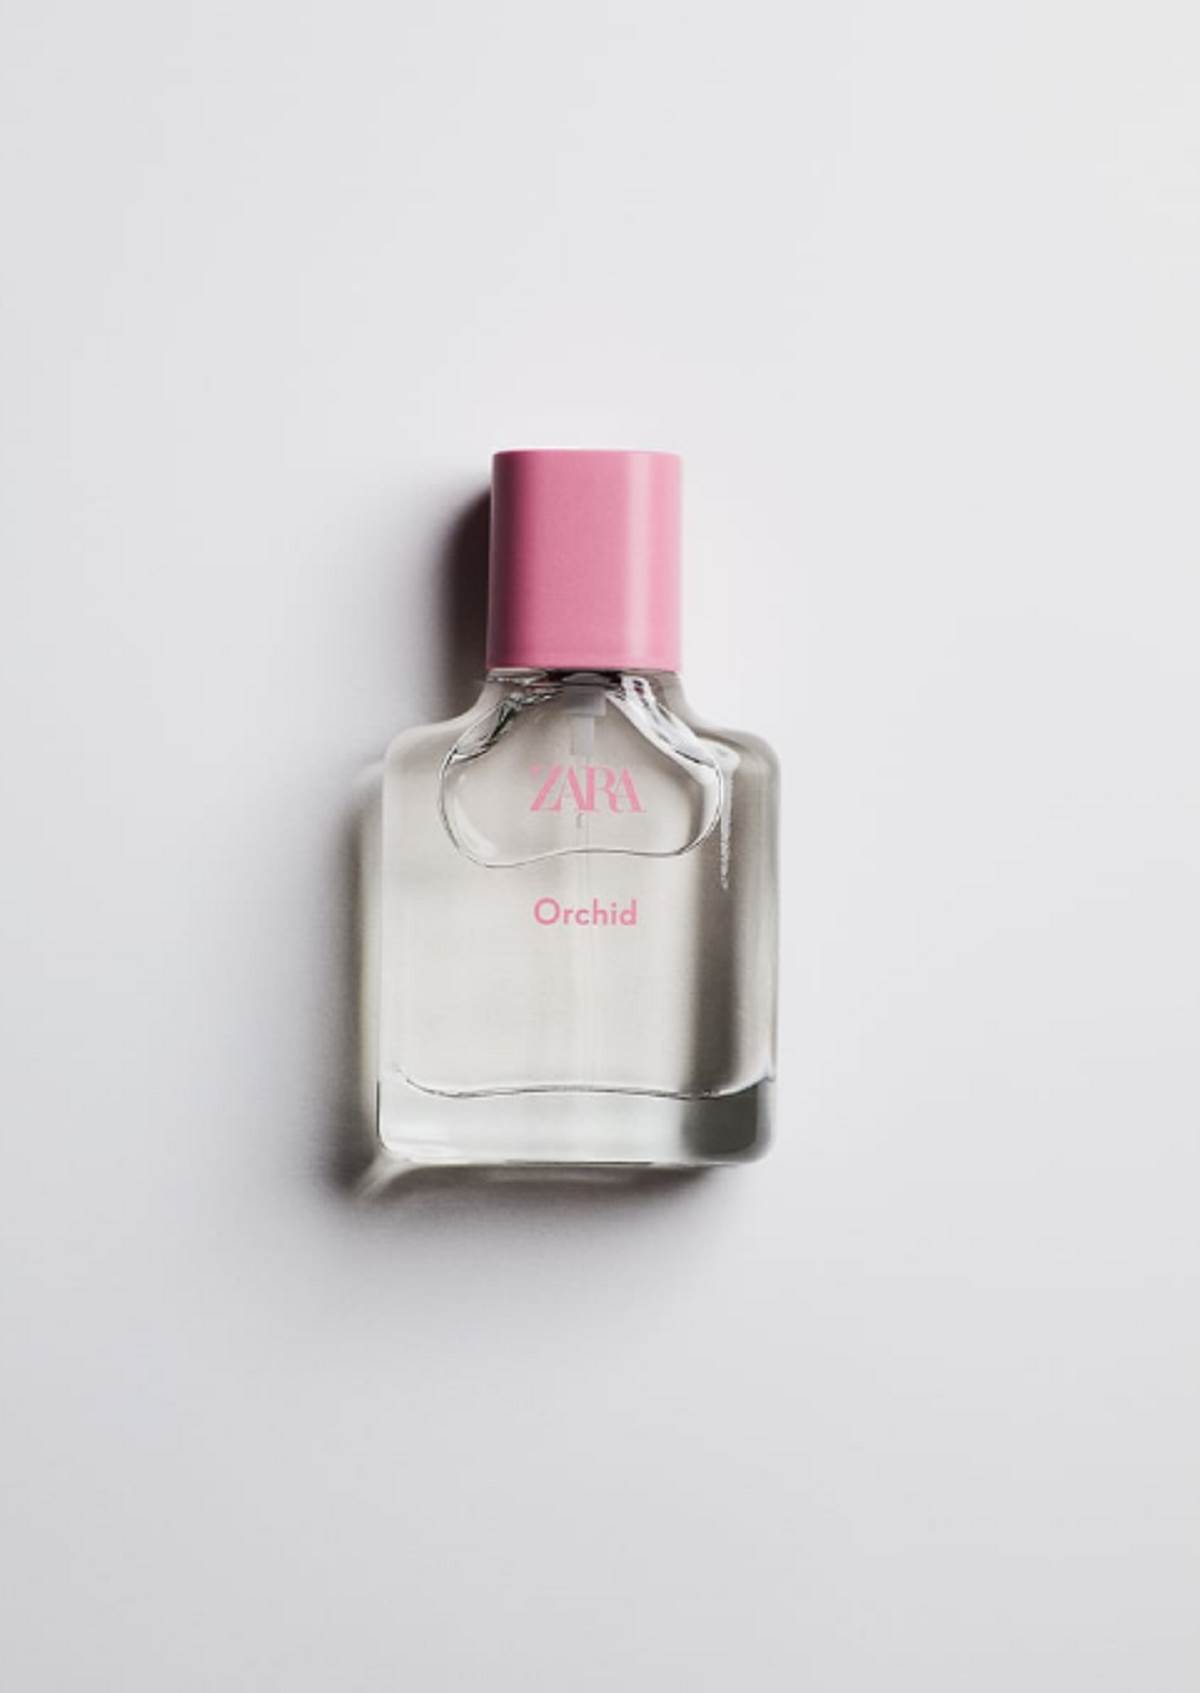  Bazna nota Zara Orchid parfema je vanila. 